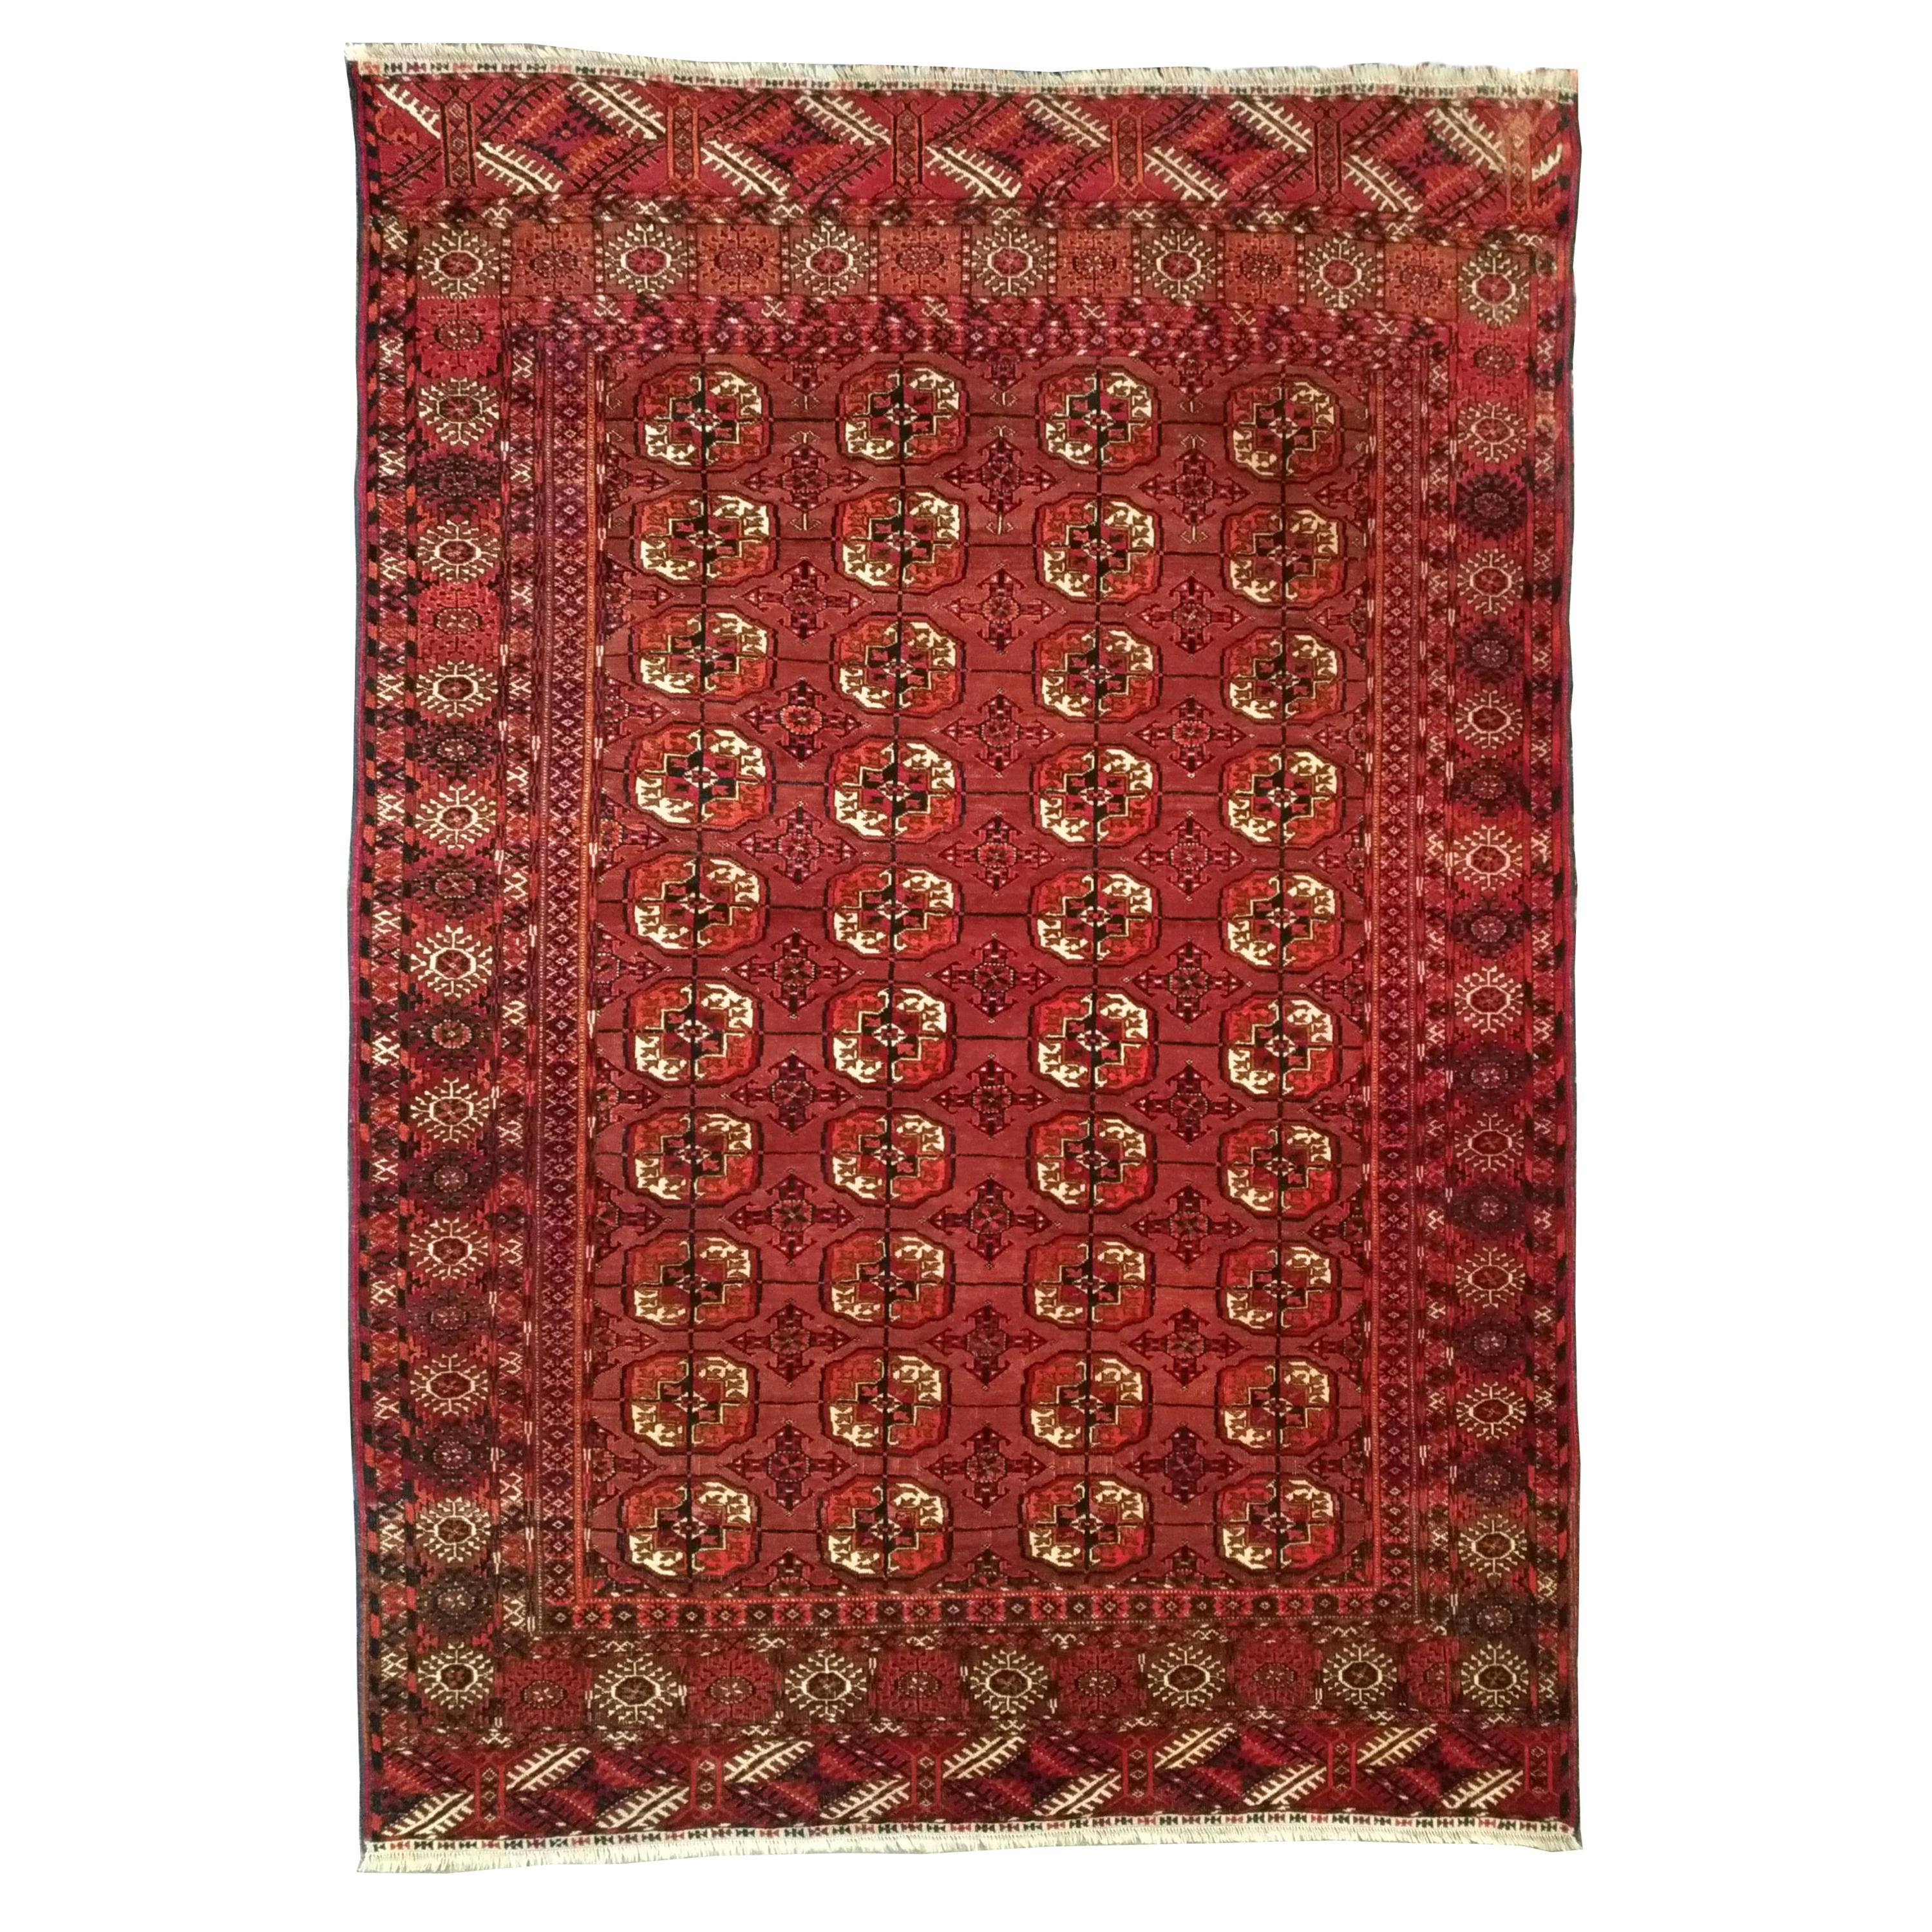 989 -19th Century Boukara Carpet